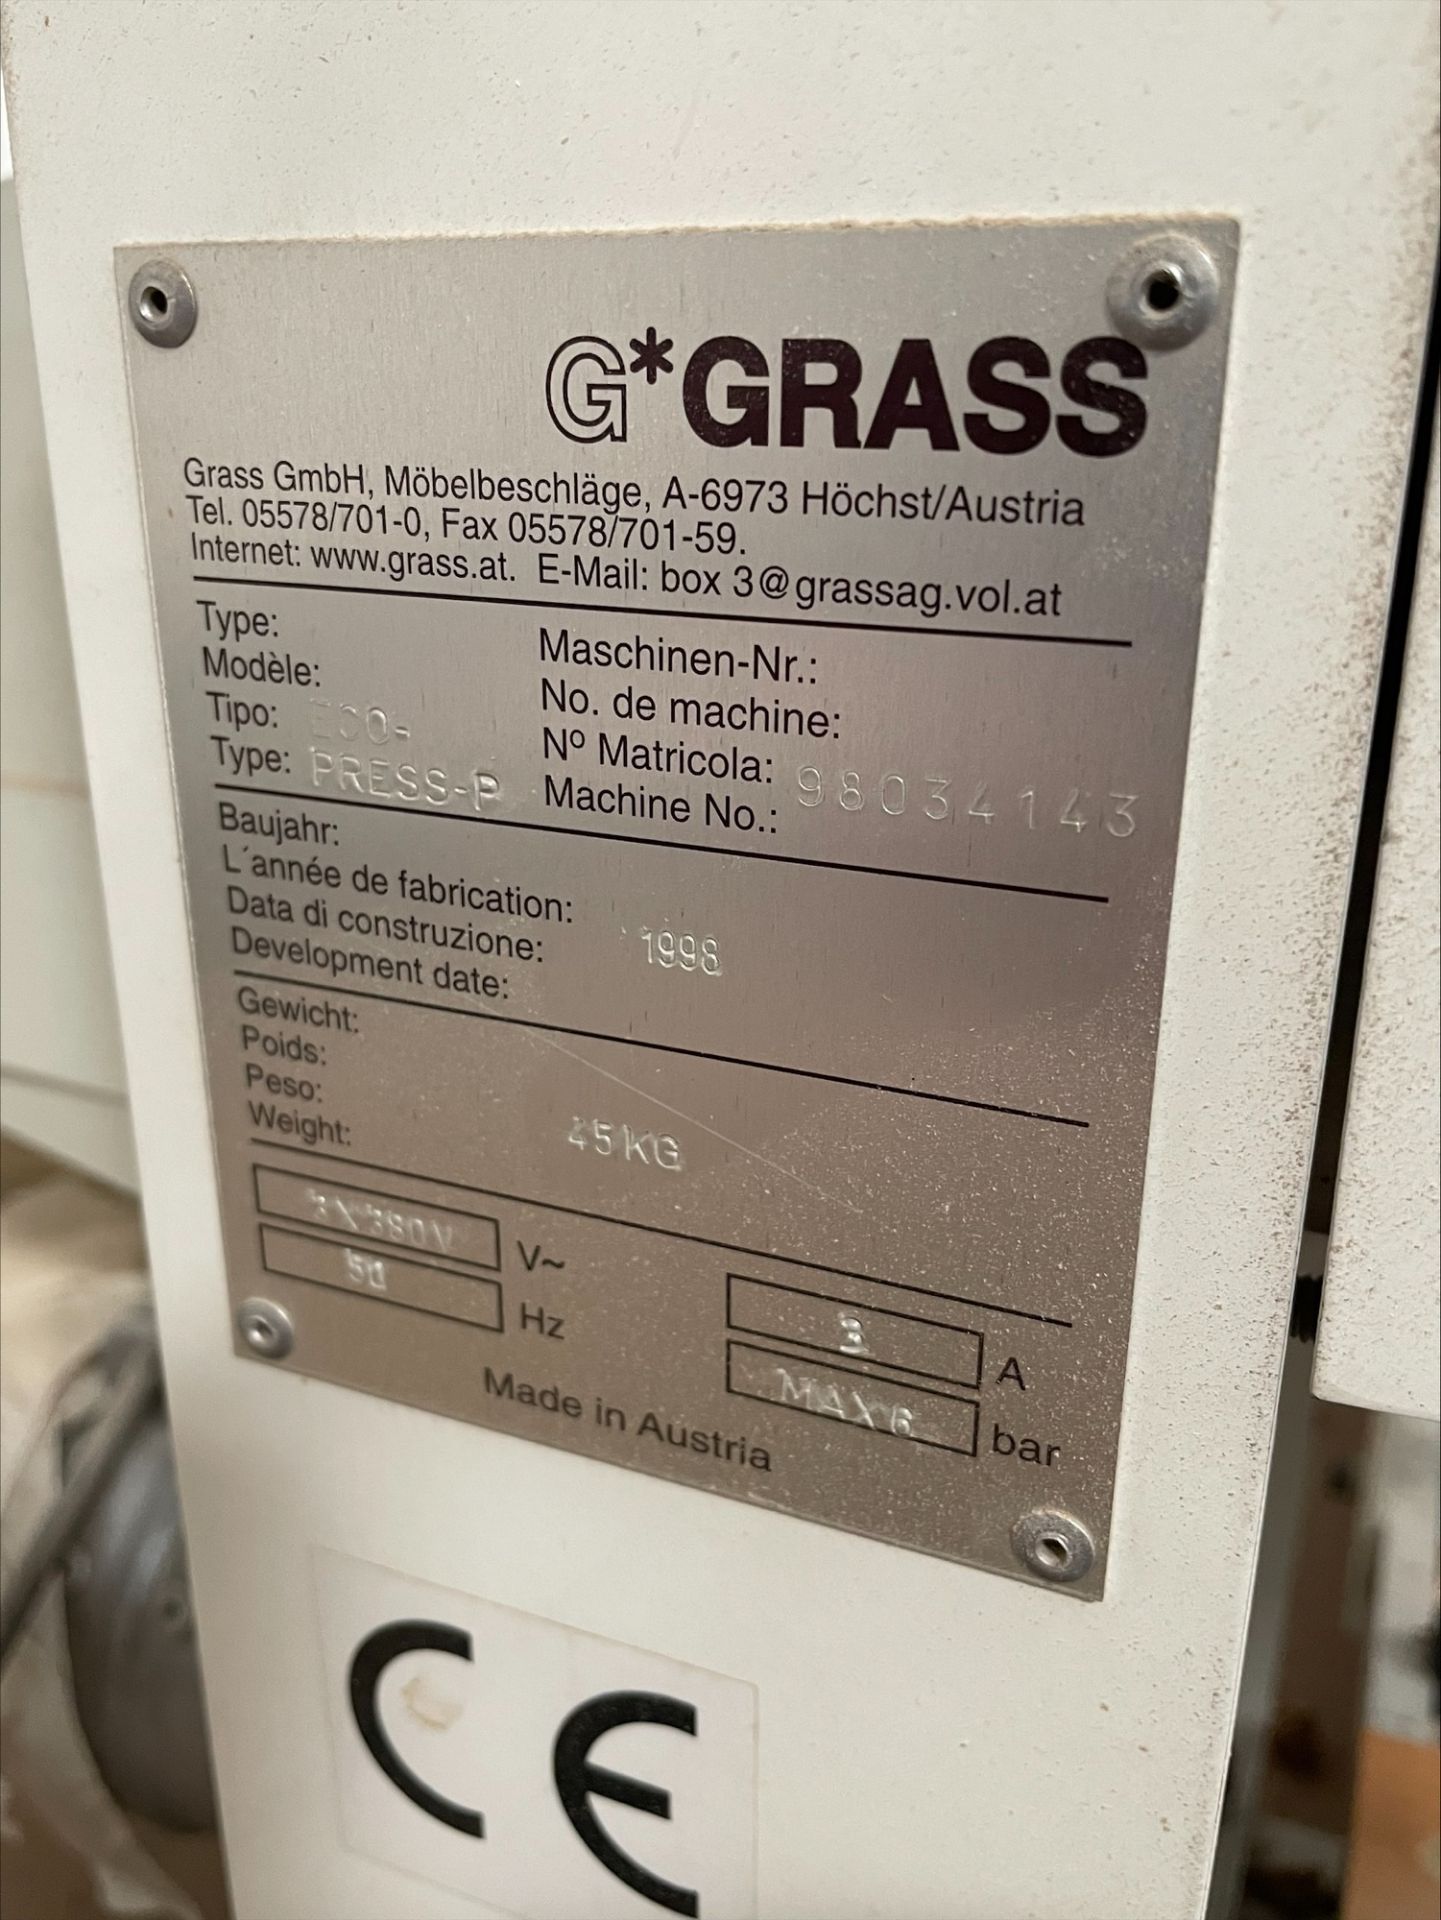 G*Grass Eco-Press P Bench mounted hinge boring & insertion machine, Serial No. 98034143 (1998) - Bild 3 aus 3